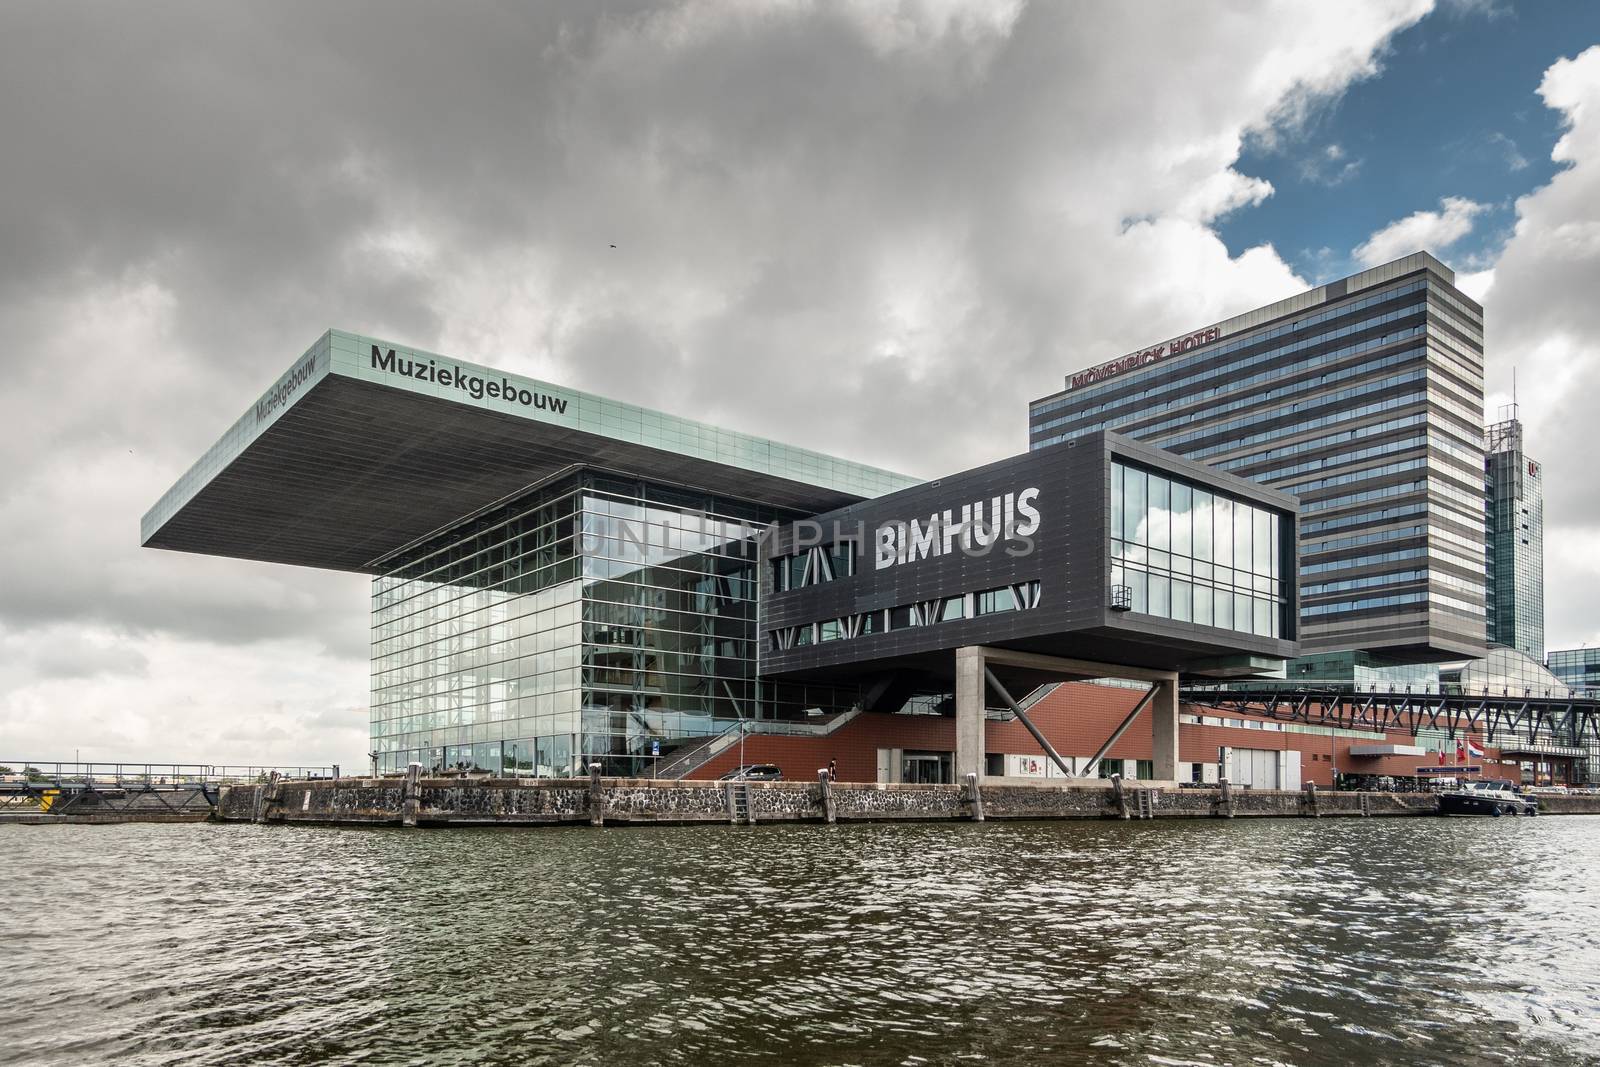 Muziekgebouw and Bimhuis in IJ in Amsterdam, the Netherlands. by Claudine